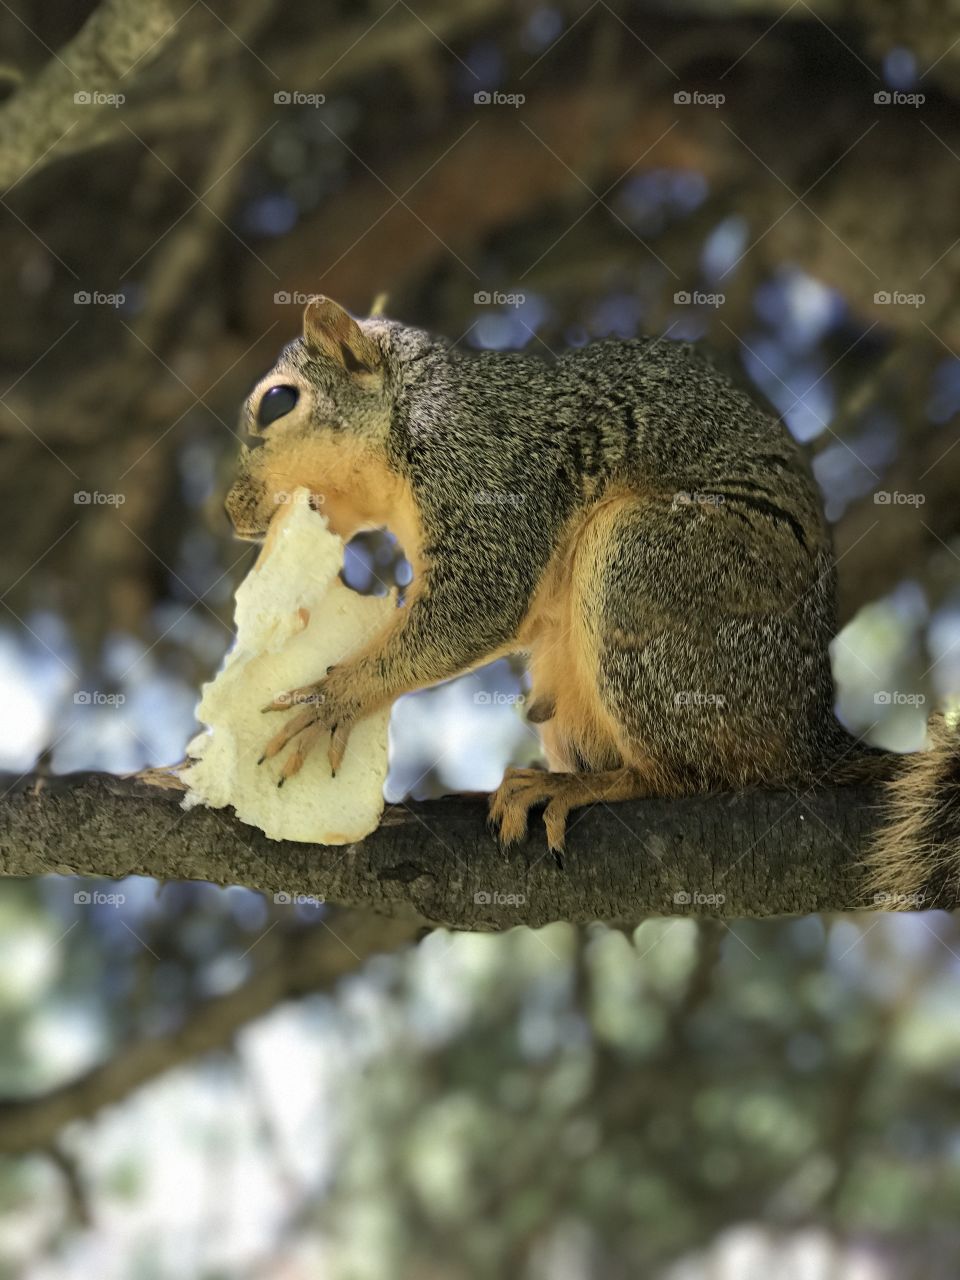 Squirrel eating bread